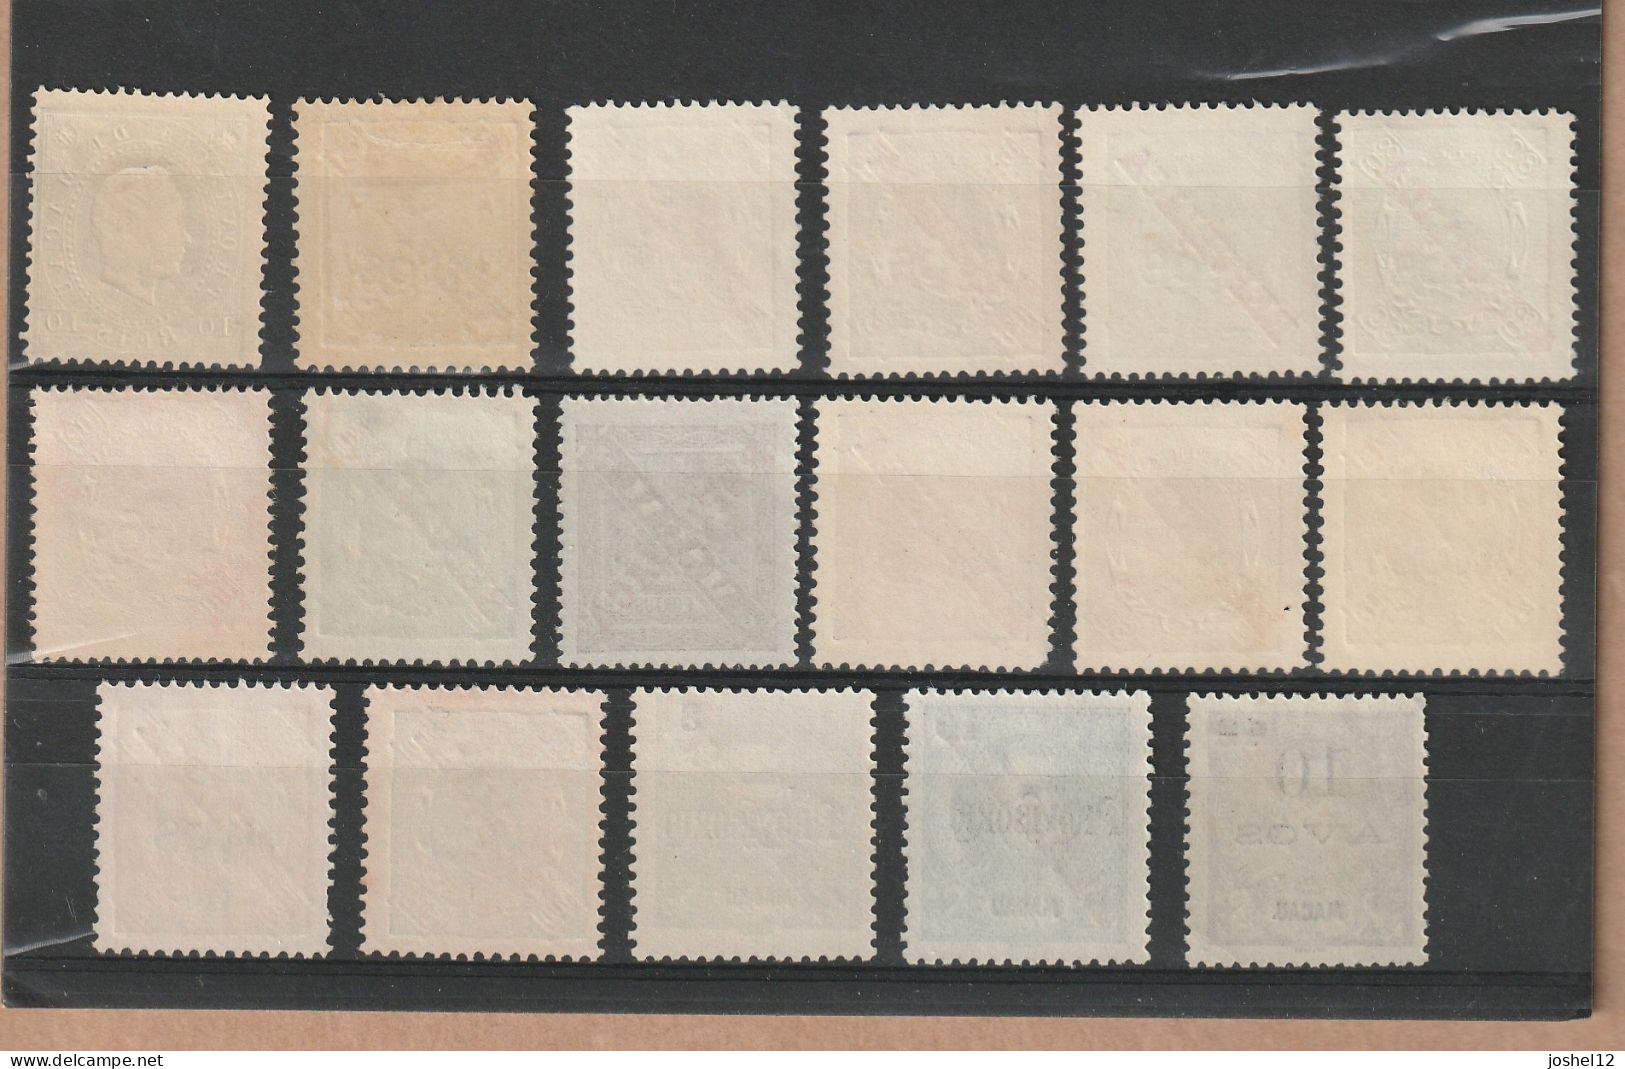 Macau Macao 1915 Luis And Carlos Overprint REPUBLICA Set. MH/No Gum. Mostly Fine - Unused Stamps